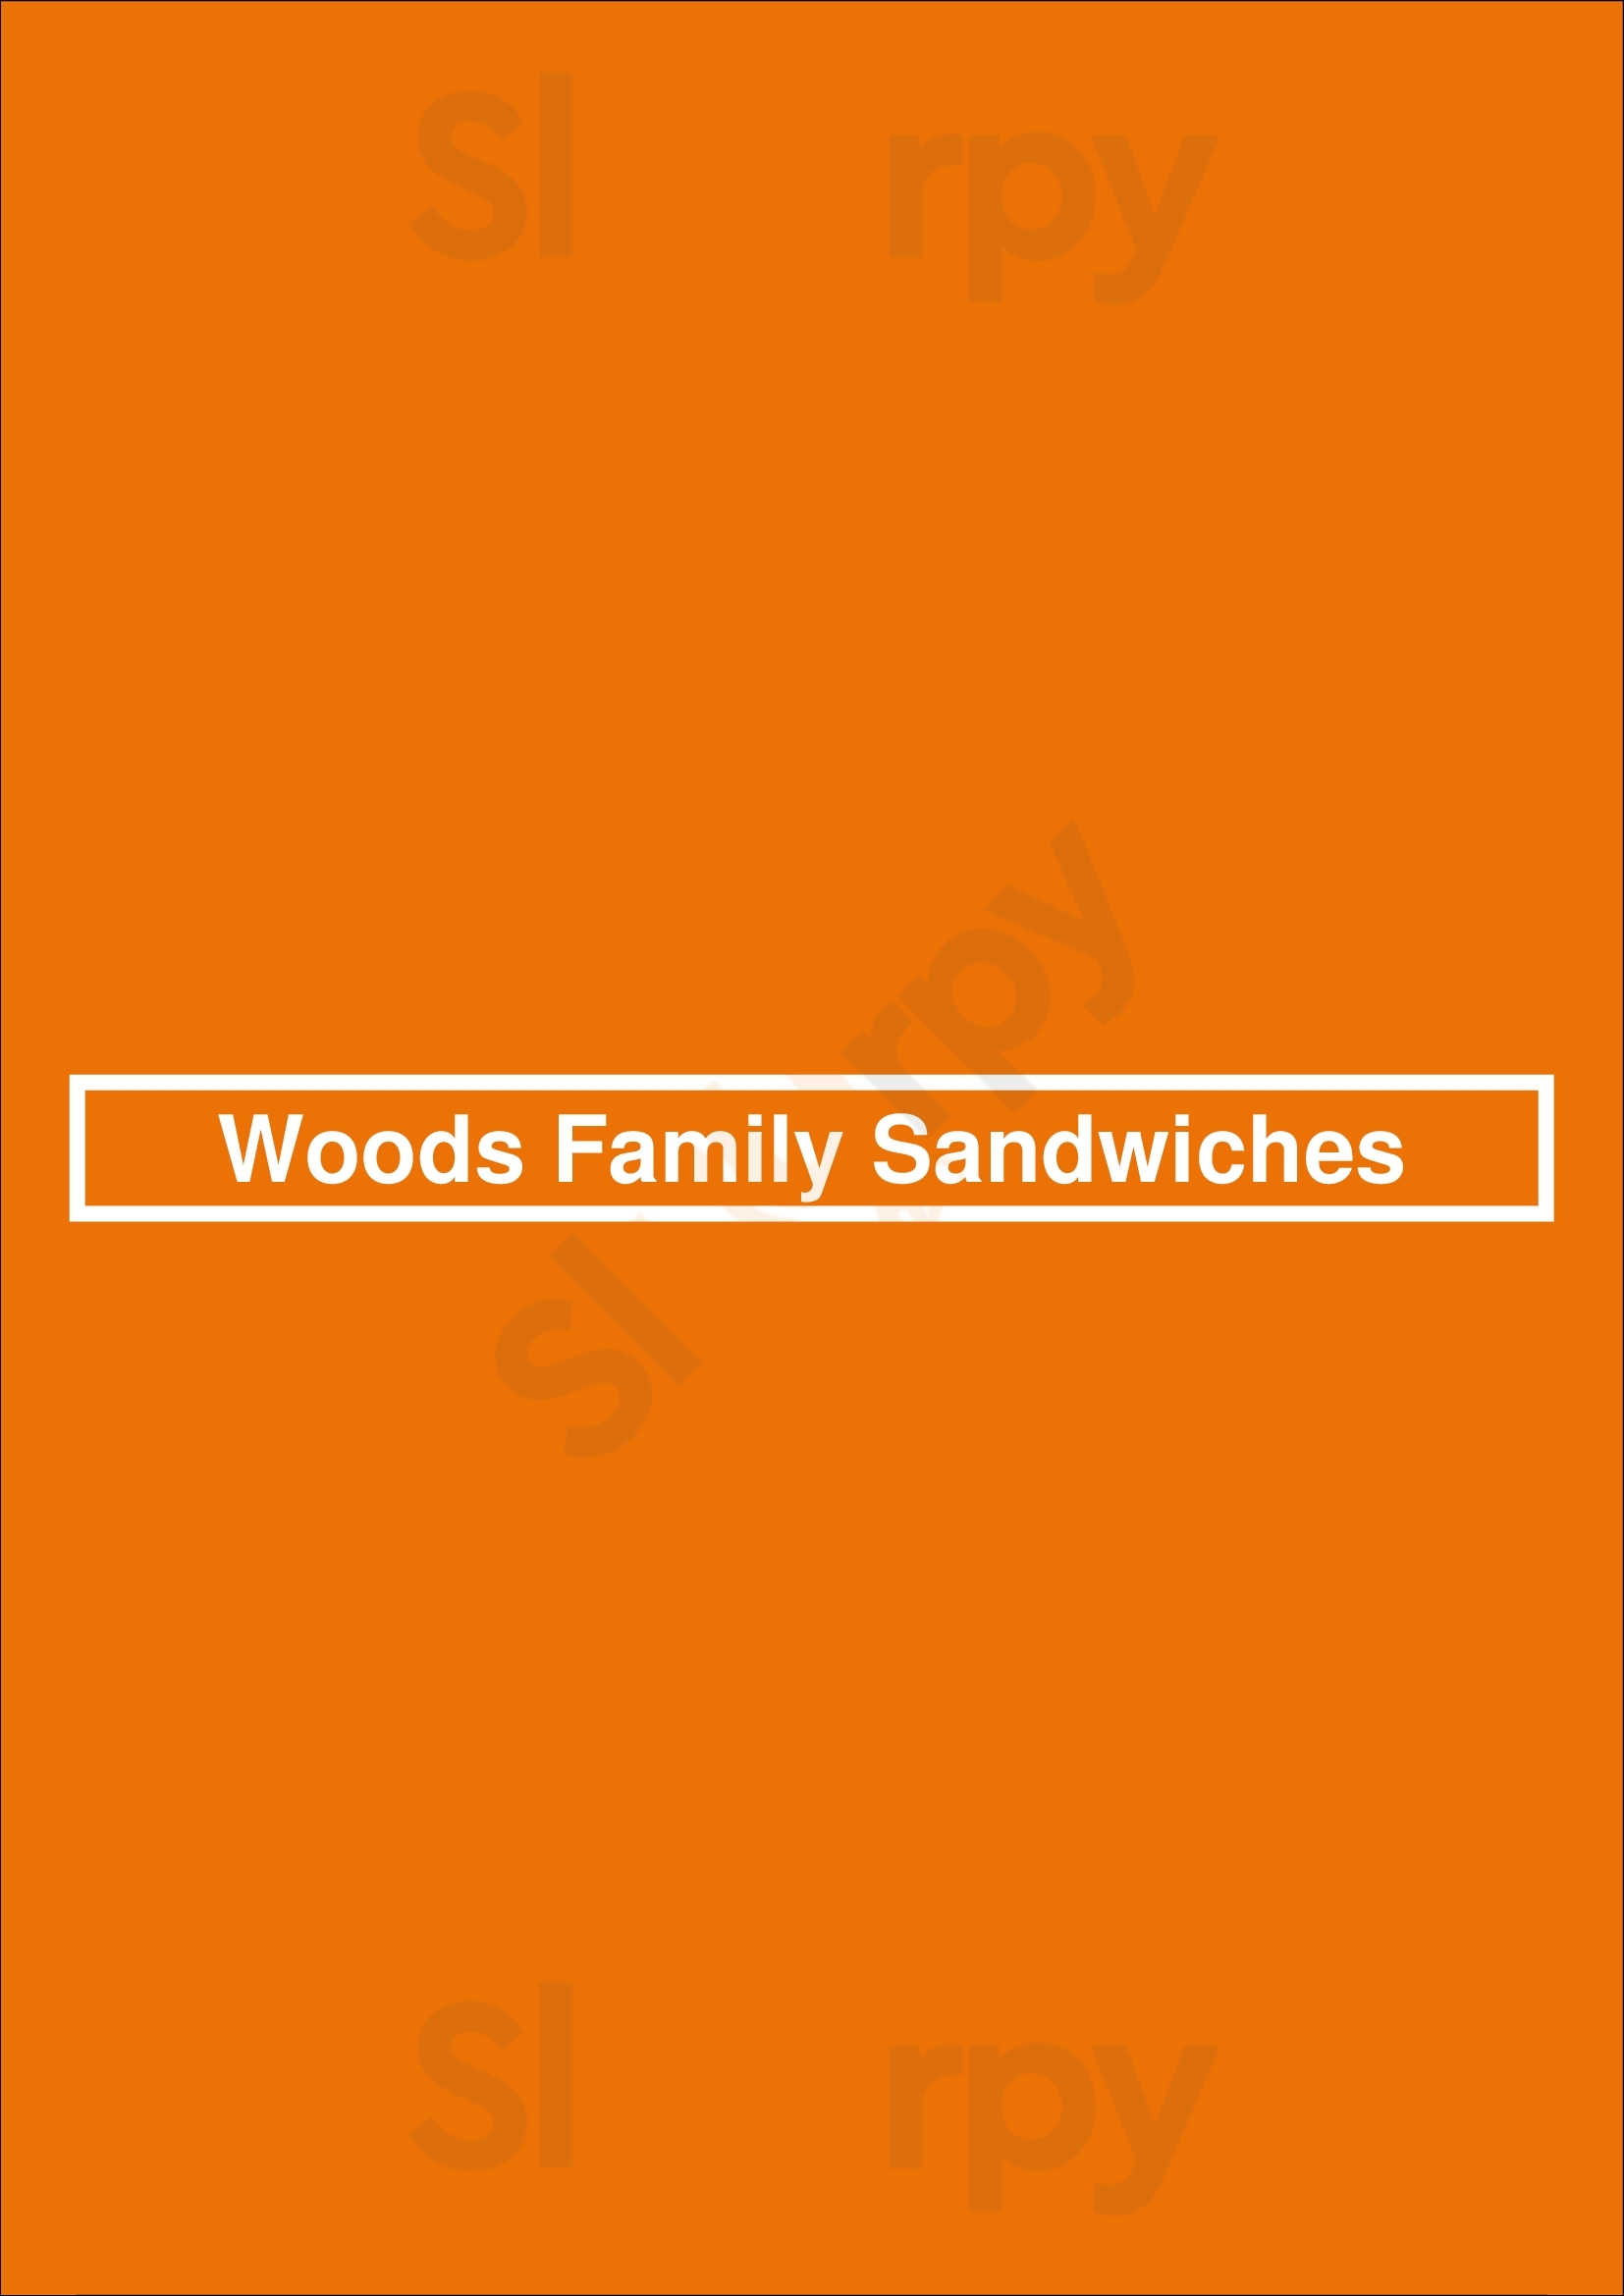 Woods Family Sandwiches Henderson Menu - 1